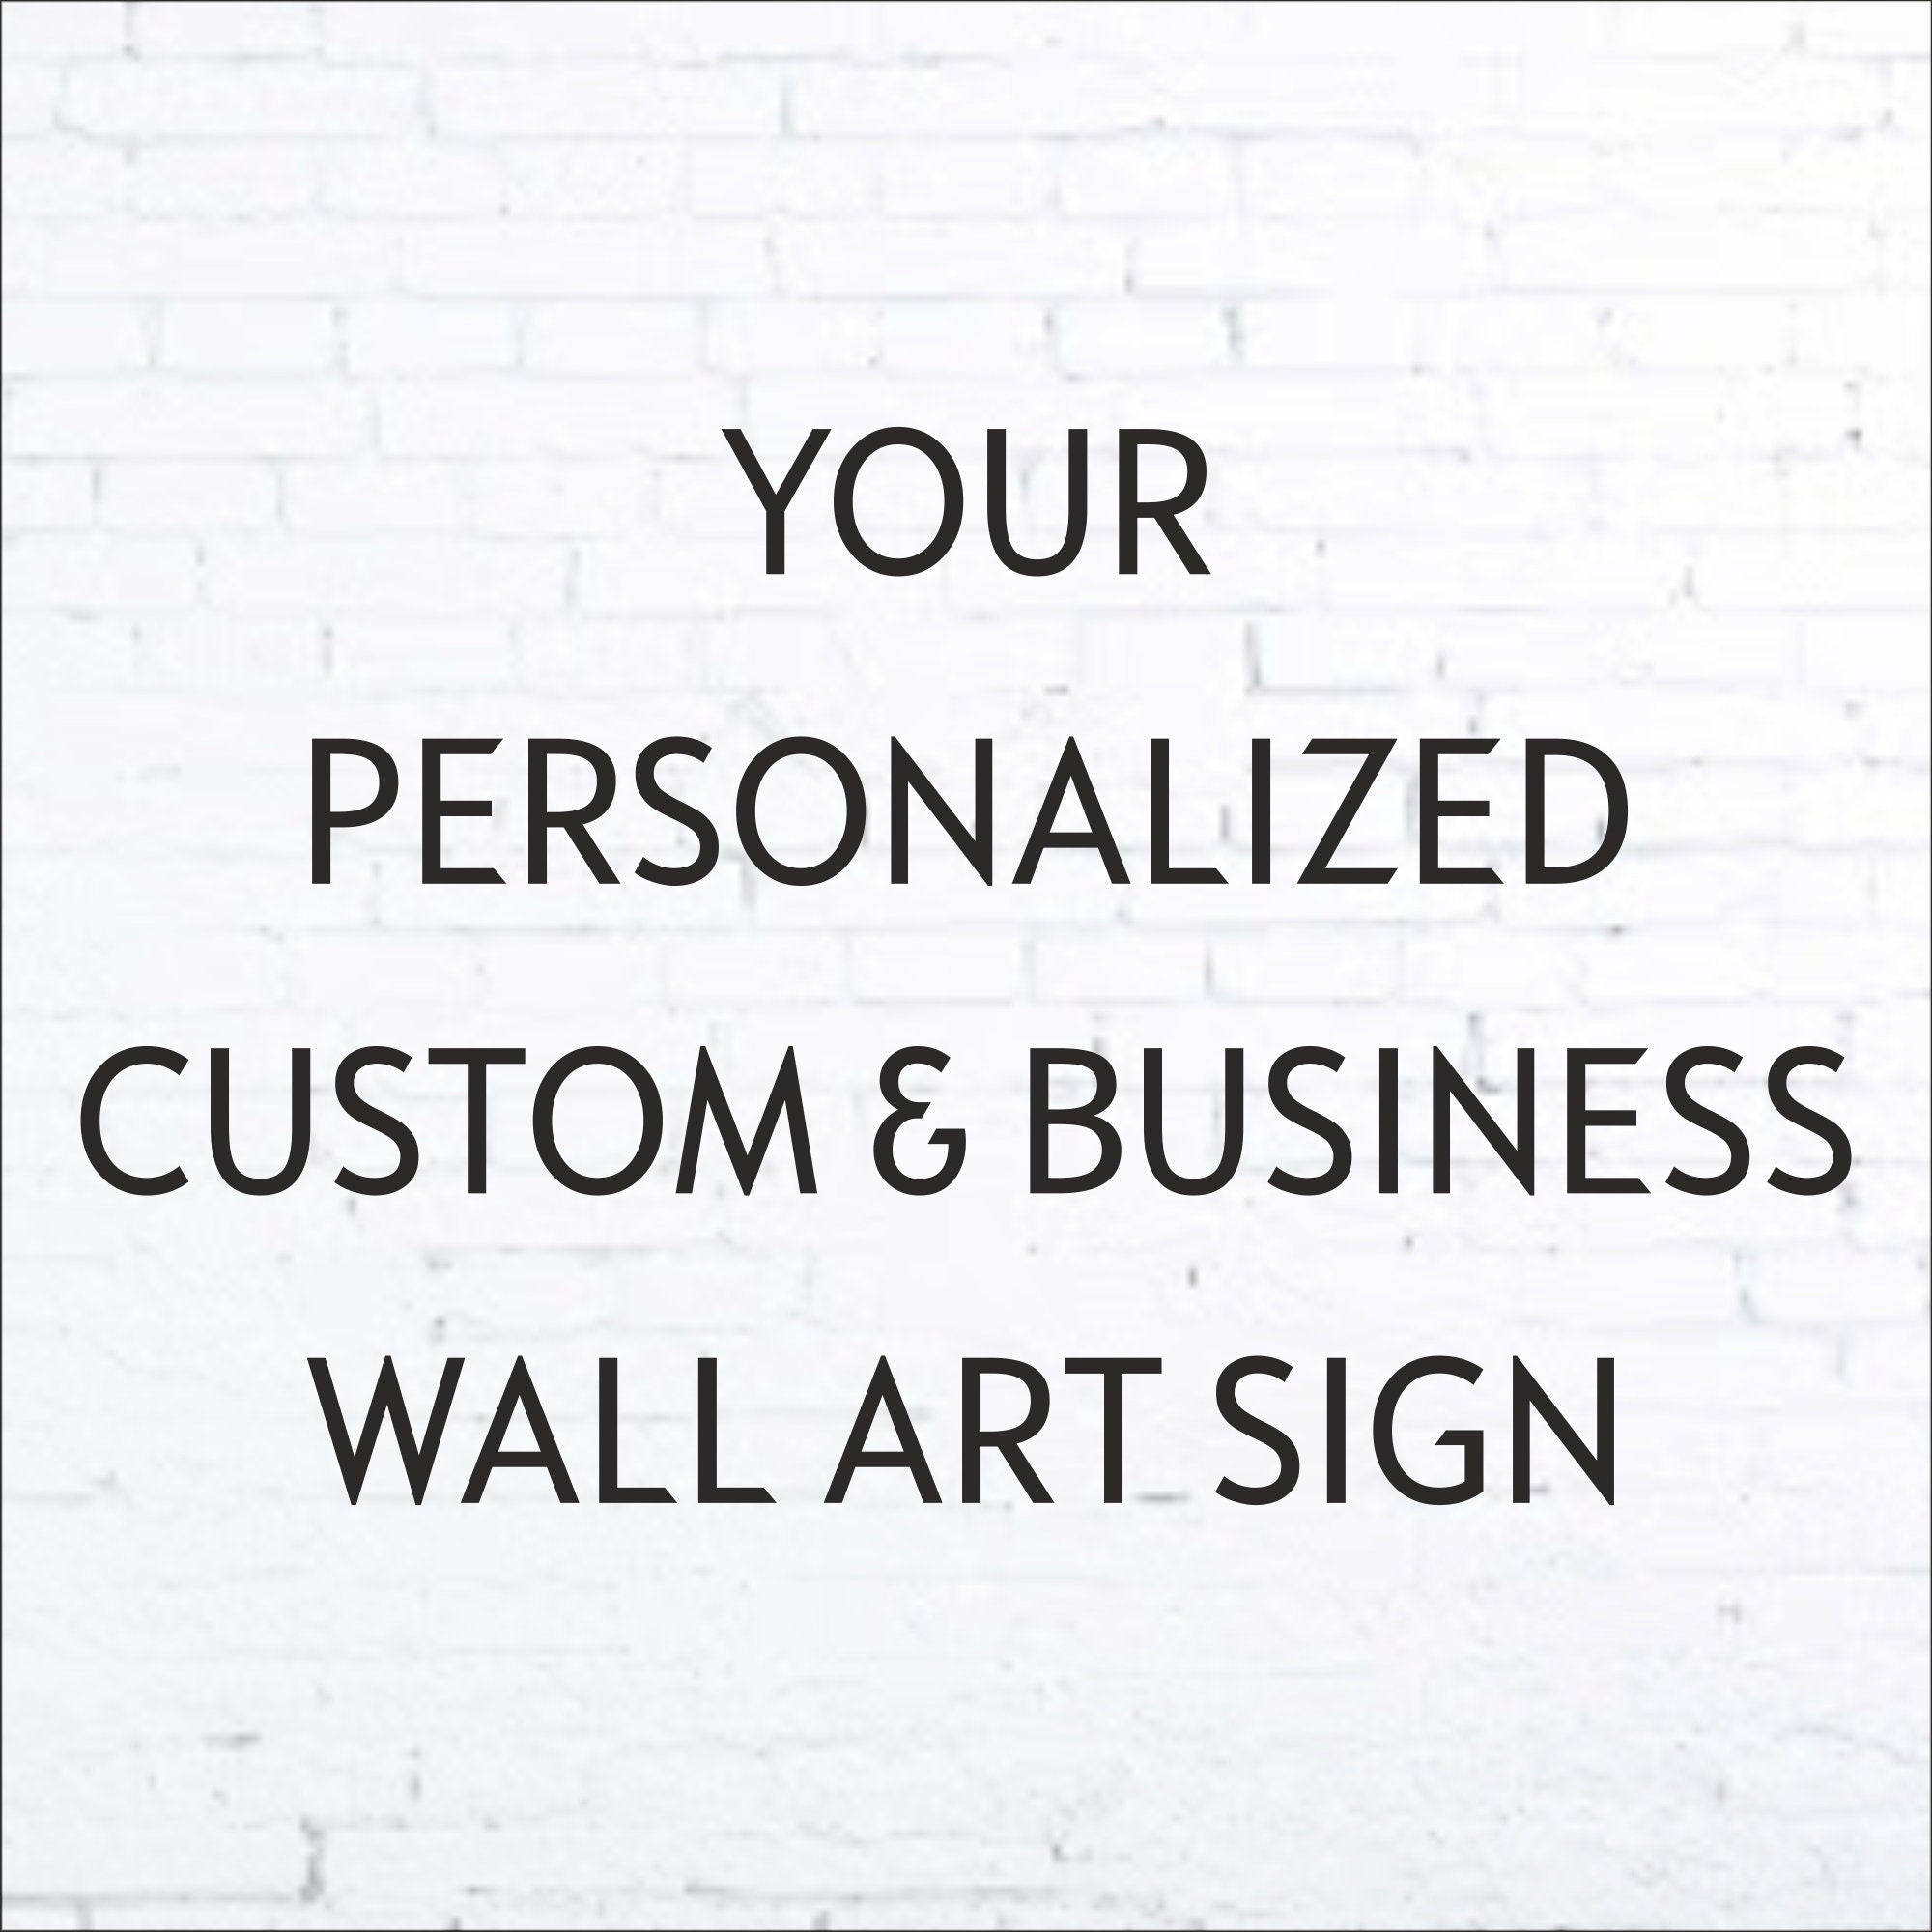 Personalized custom wall art